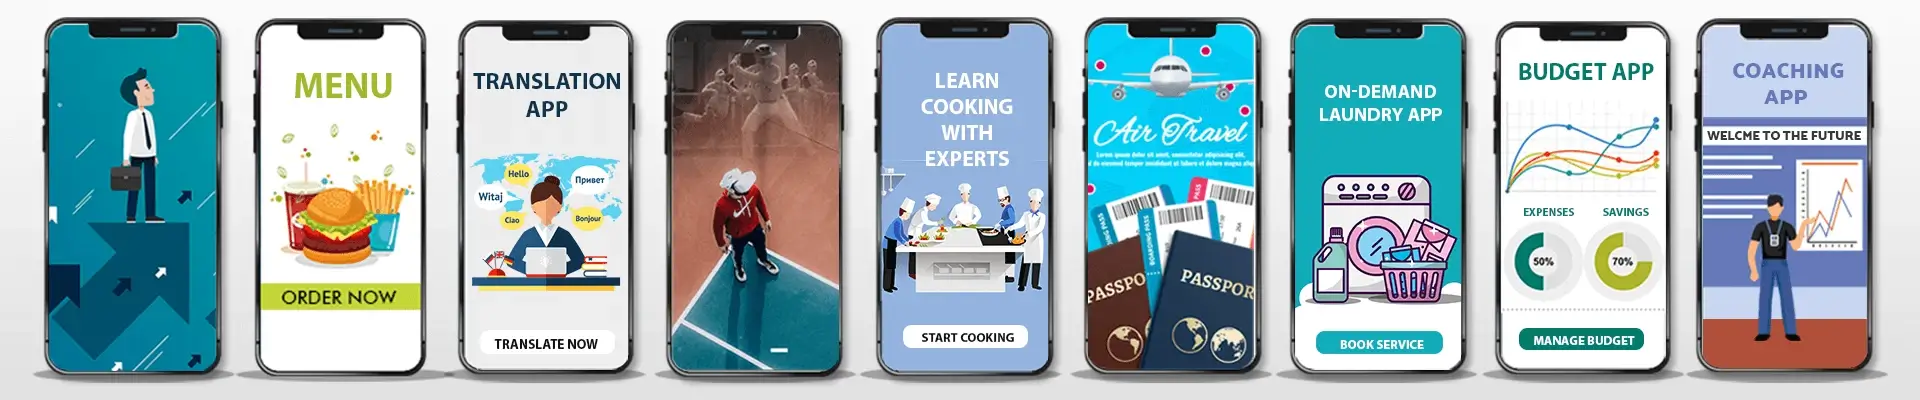 Best-10-Mobile-App-ideas-for-Startups-to-earn-money-in-2020-banner